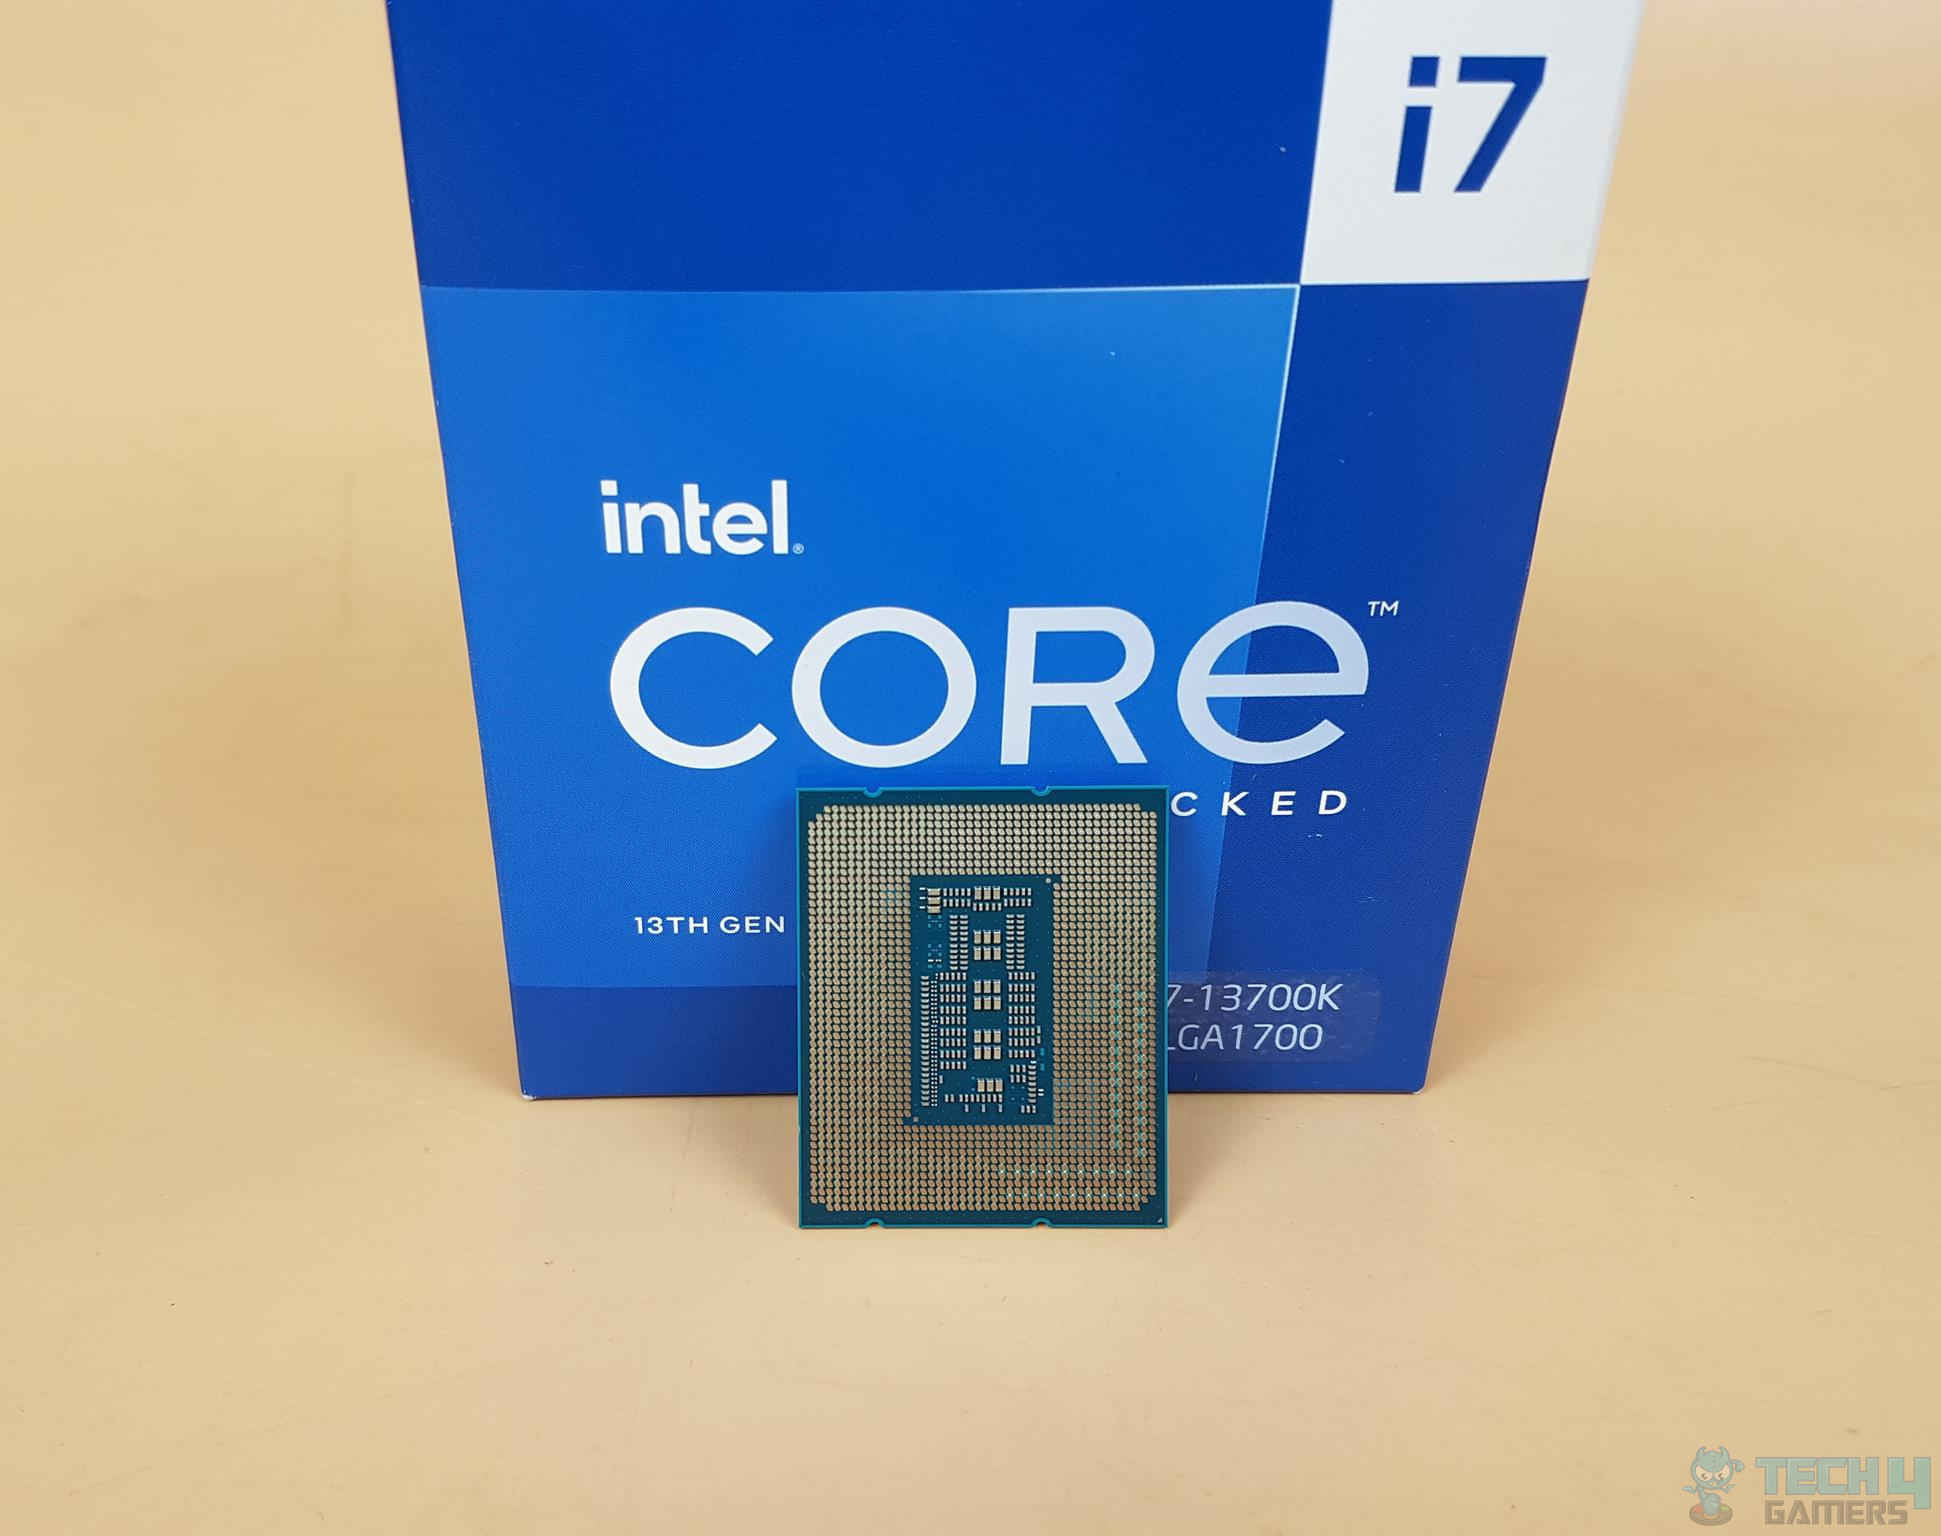 Backside of the Core i7-13700K